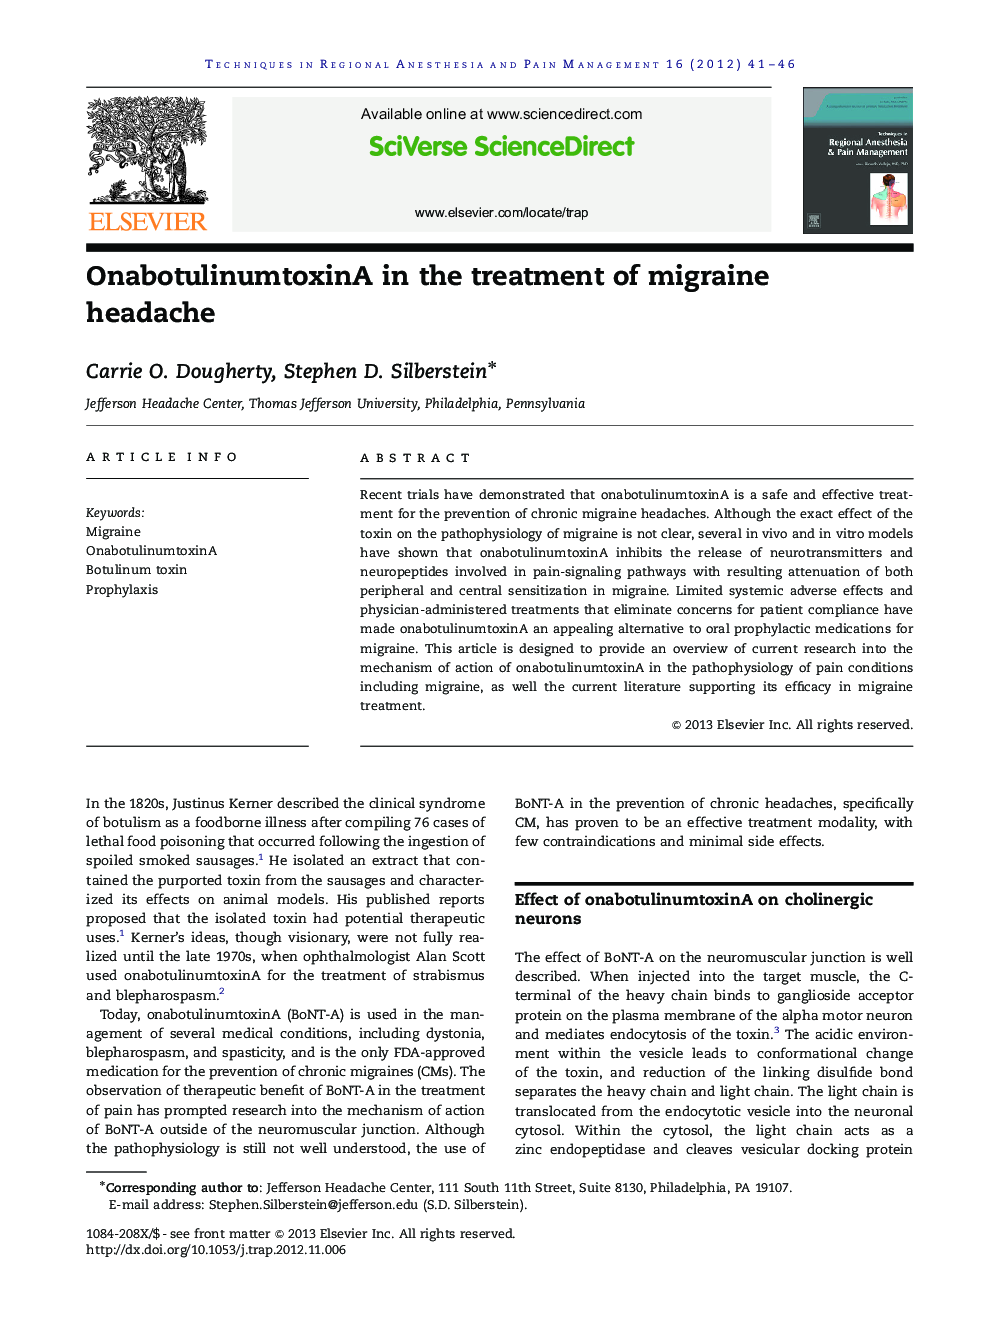 OnabotulinumtoxinA in the treatment of migraine headache